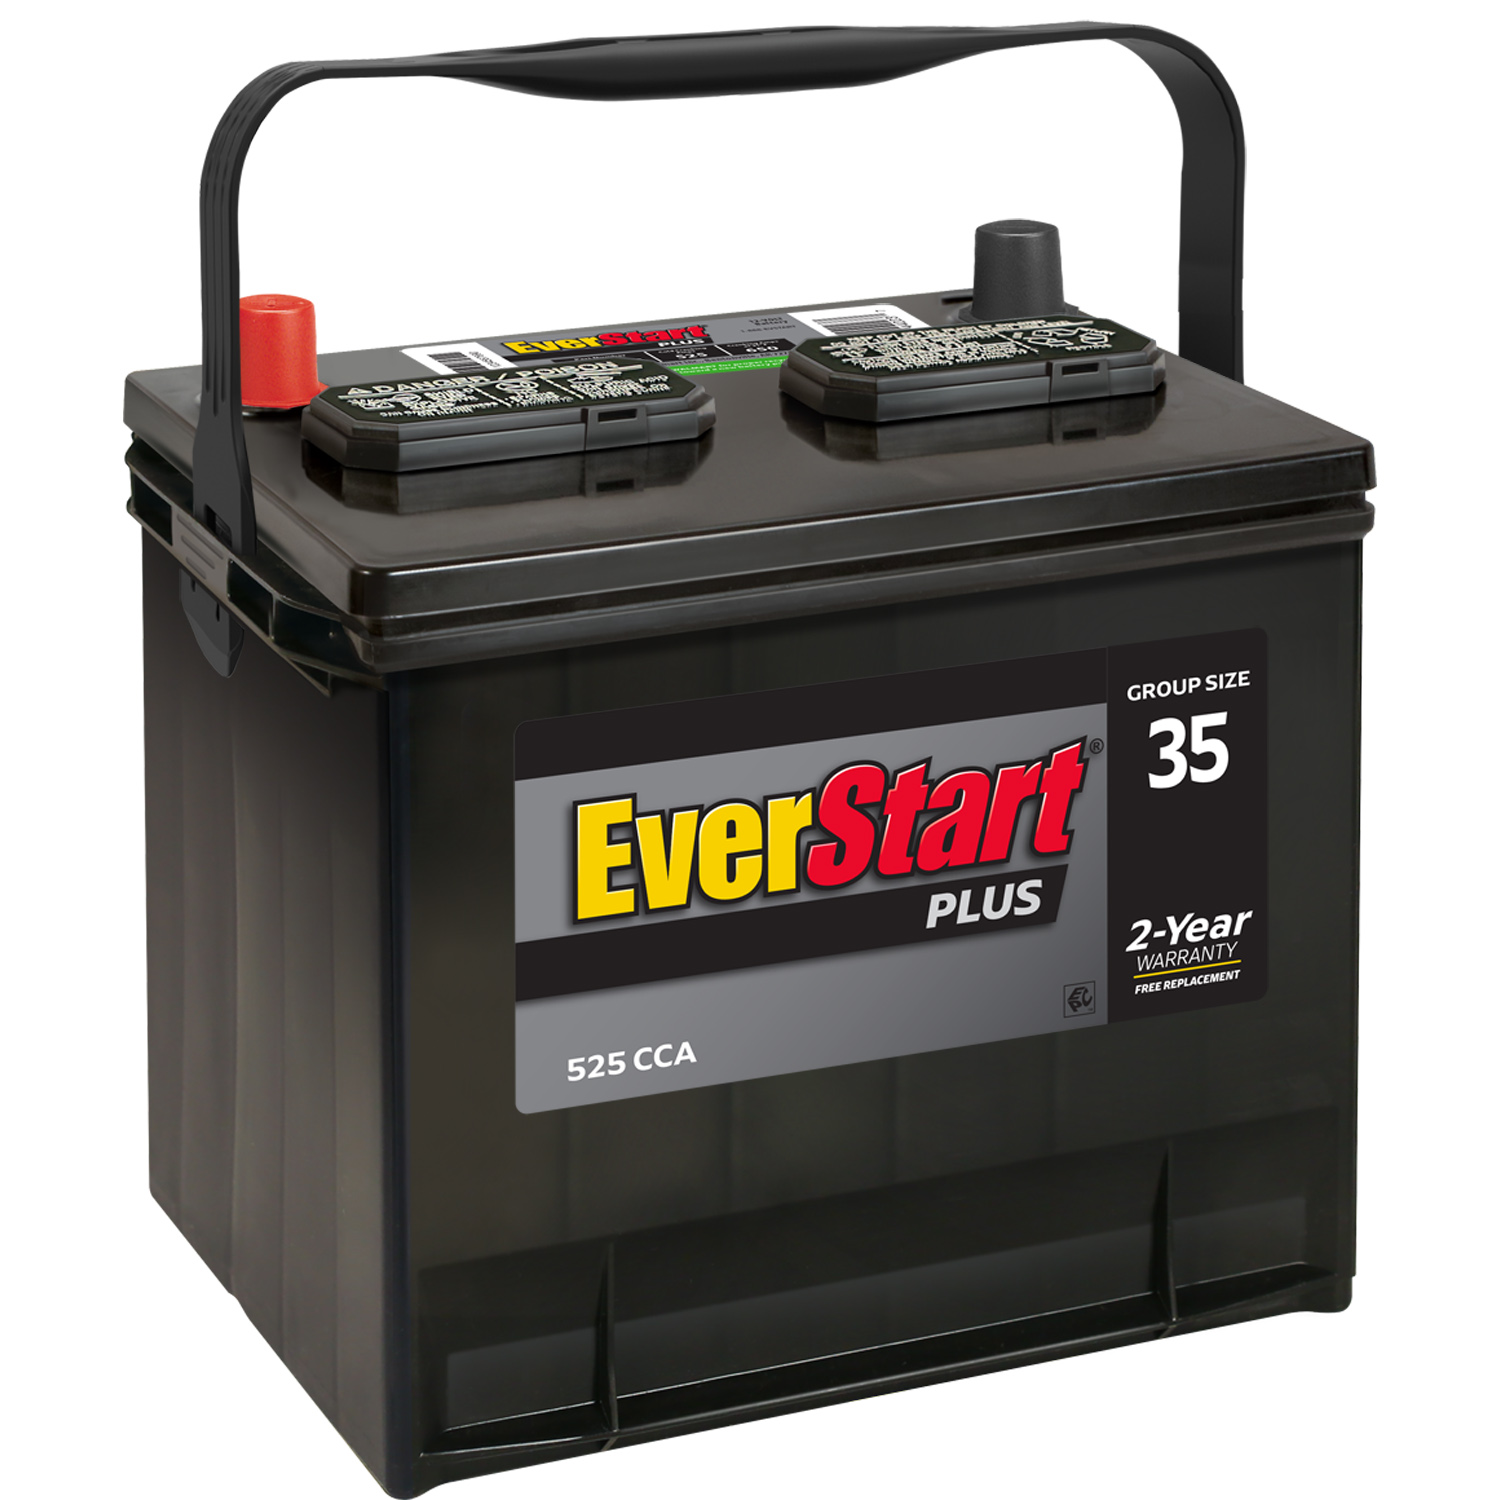 EverStart Plus Lead Acid Automotive Battery, Group Size 35 12 Volt, 525 CCA - image 1 of 7